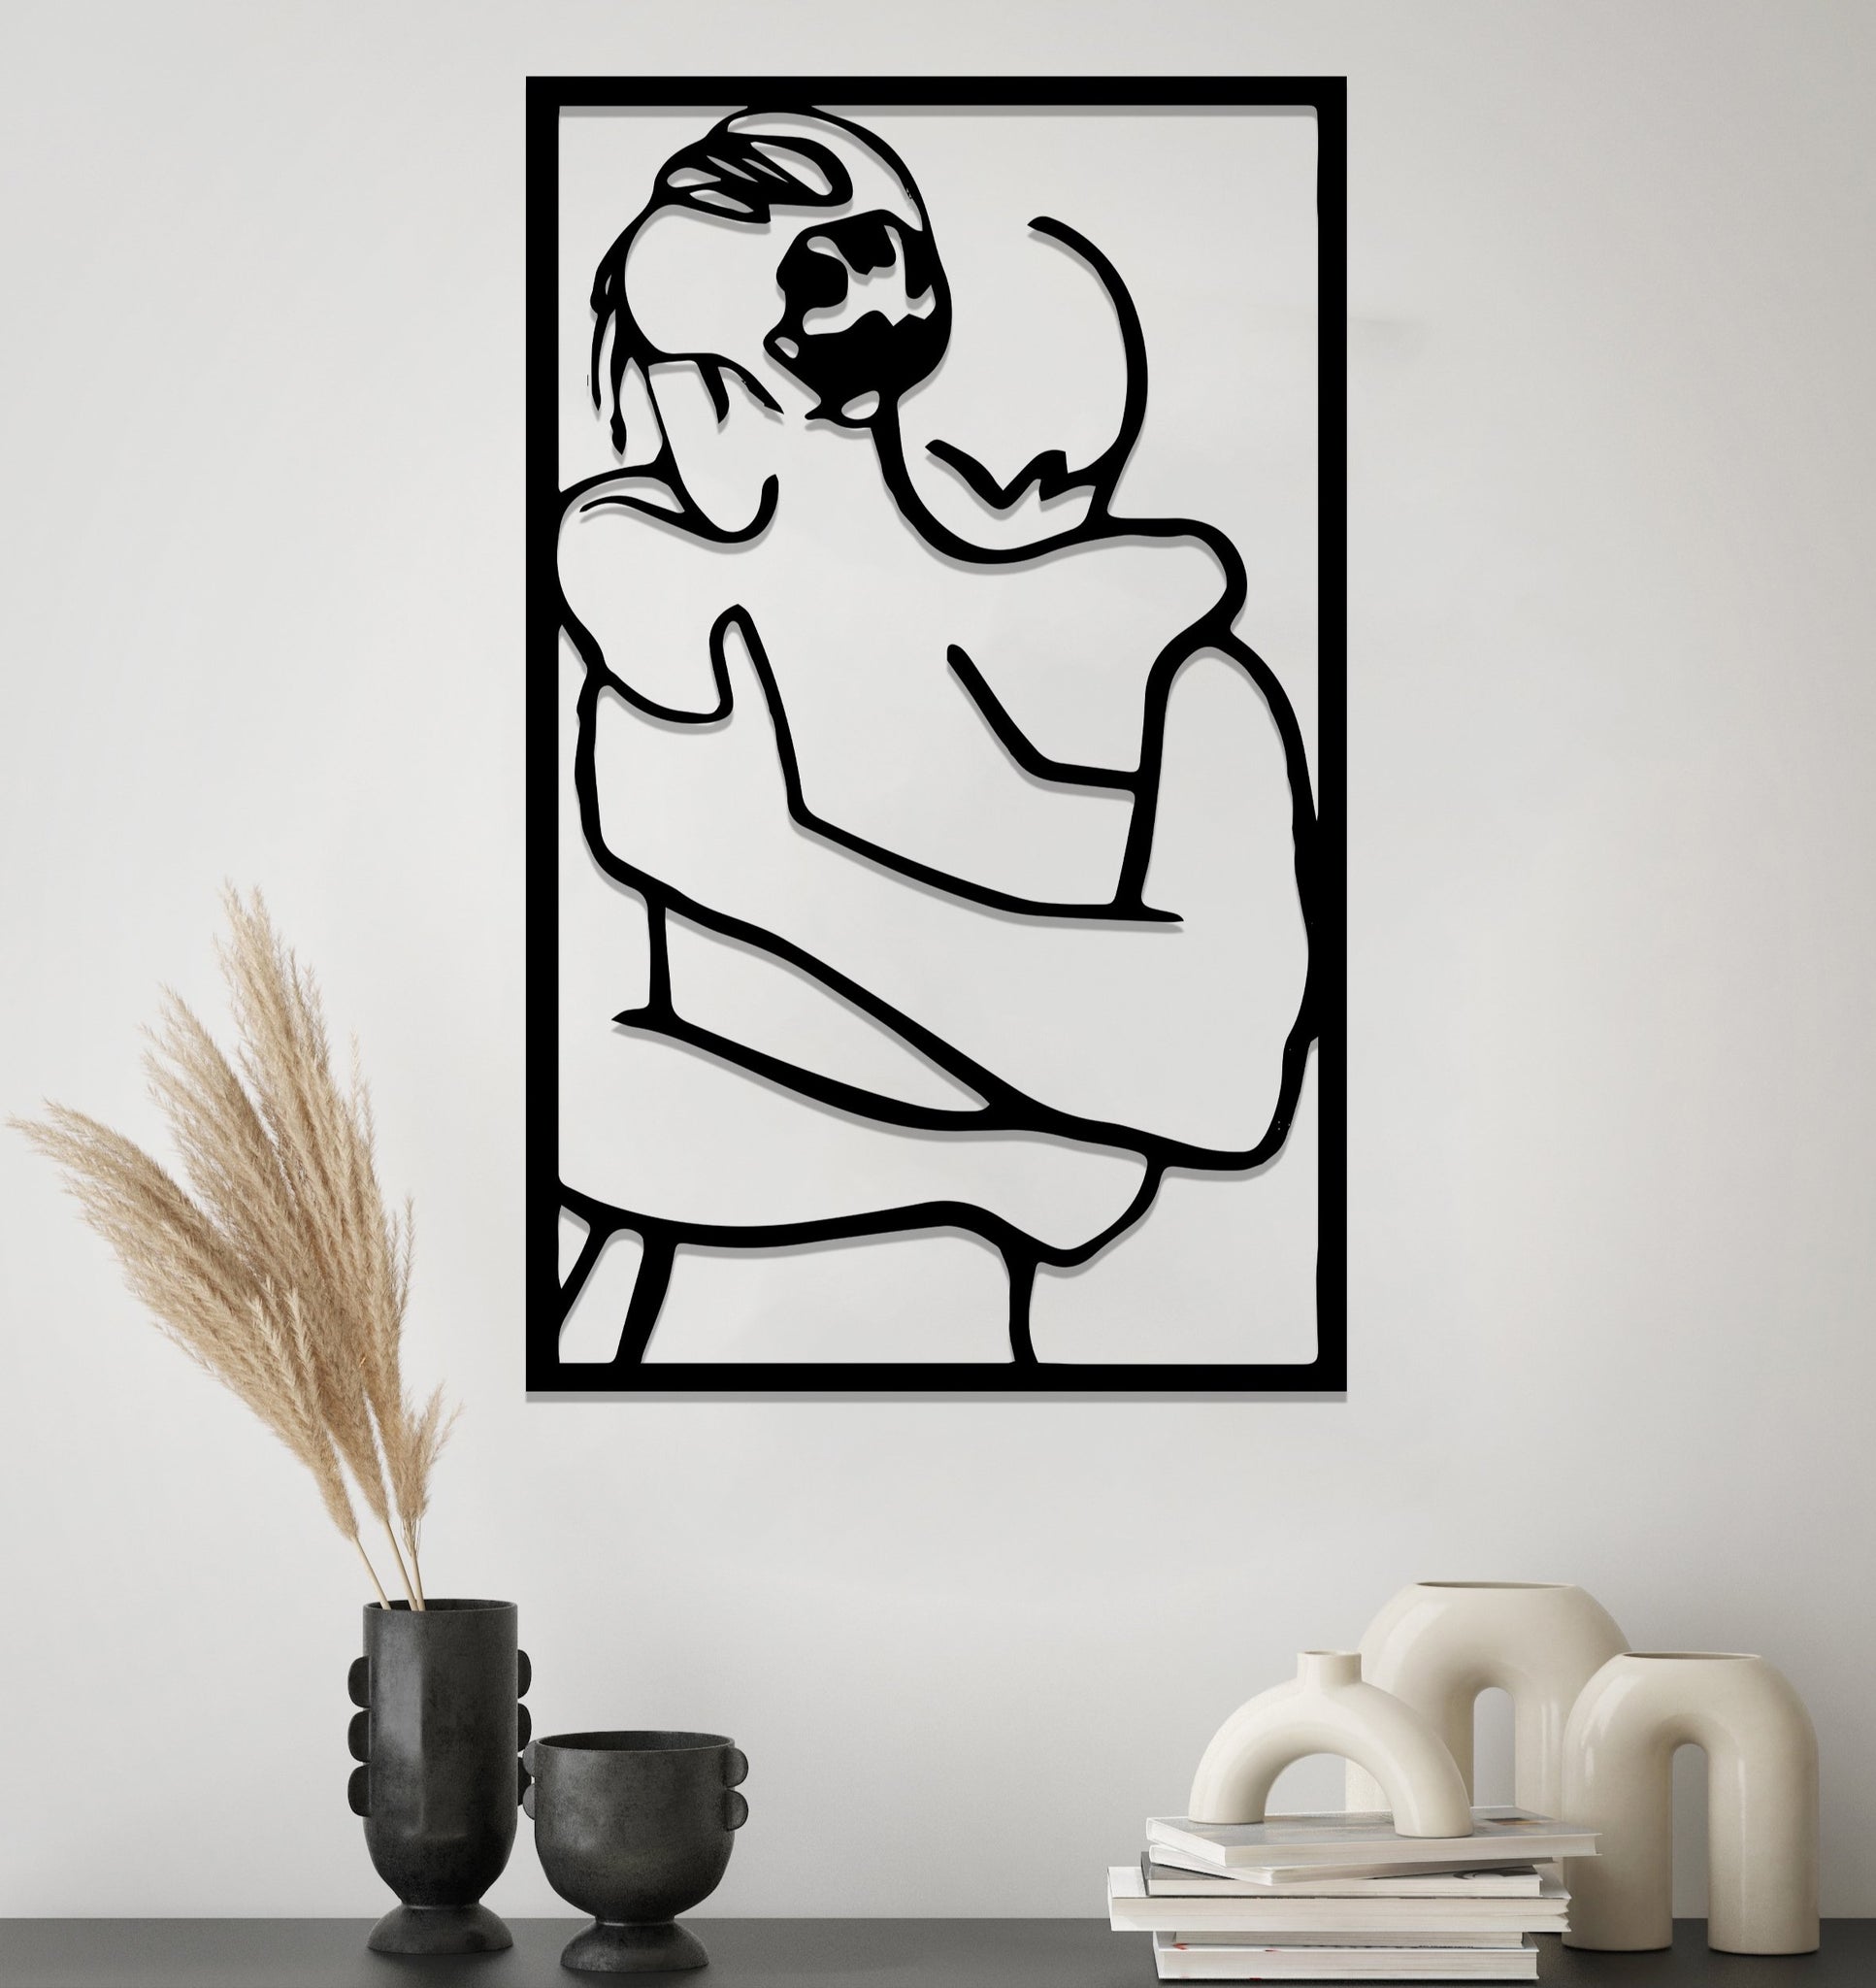 Деревянная картина "Couple"  (70 x 43 см)